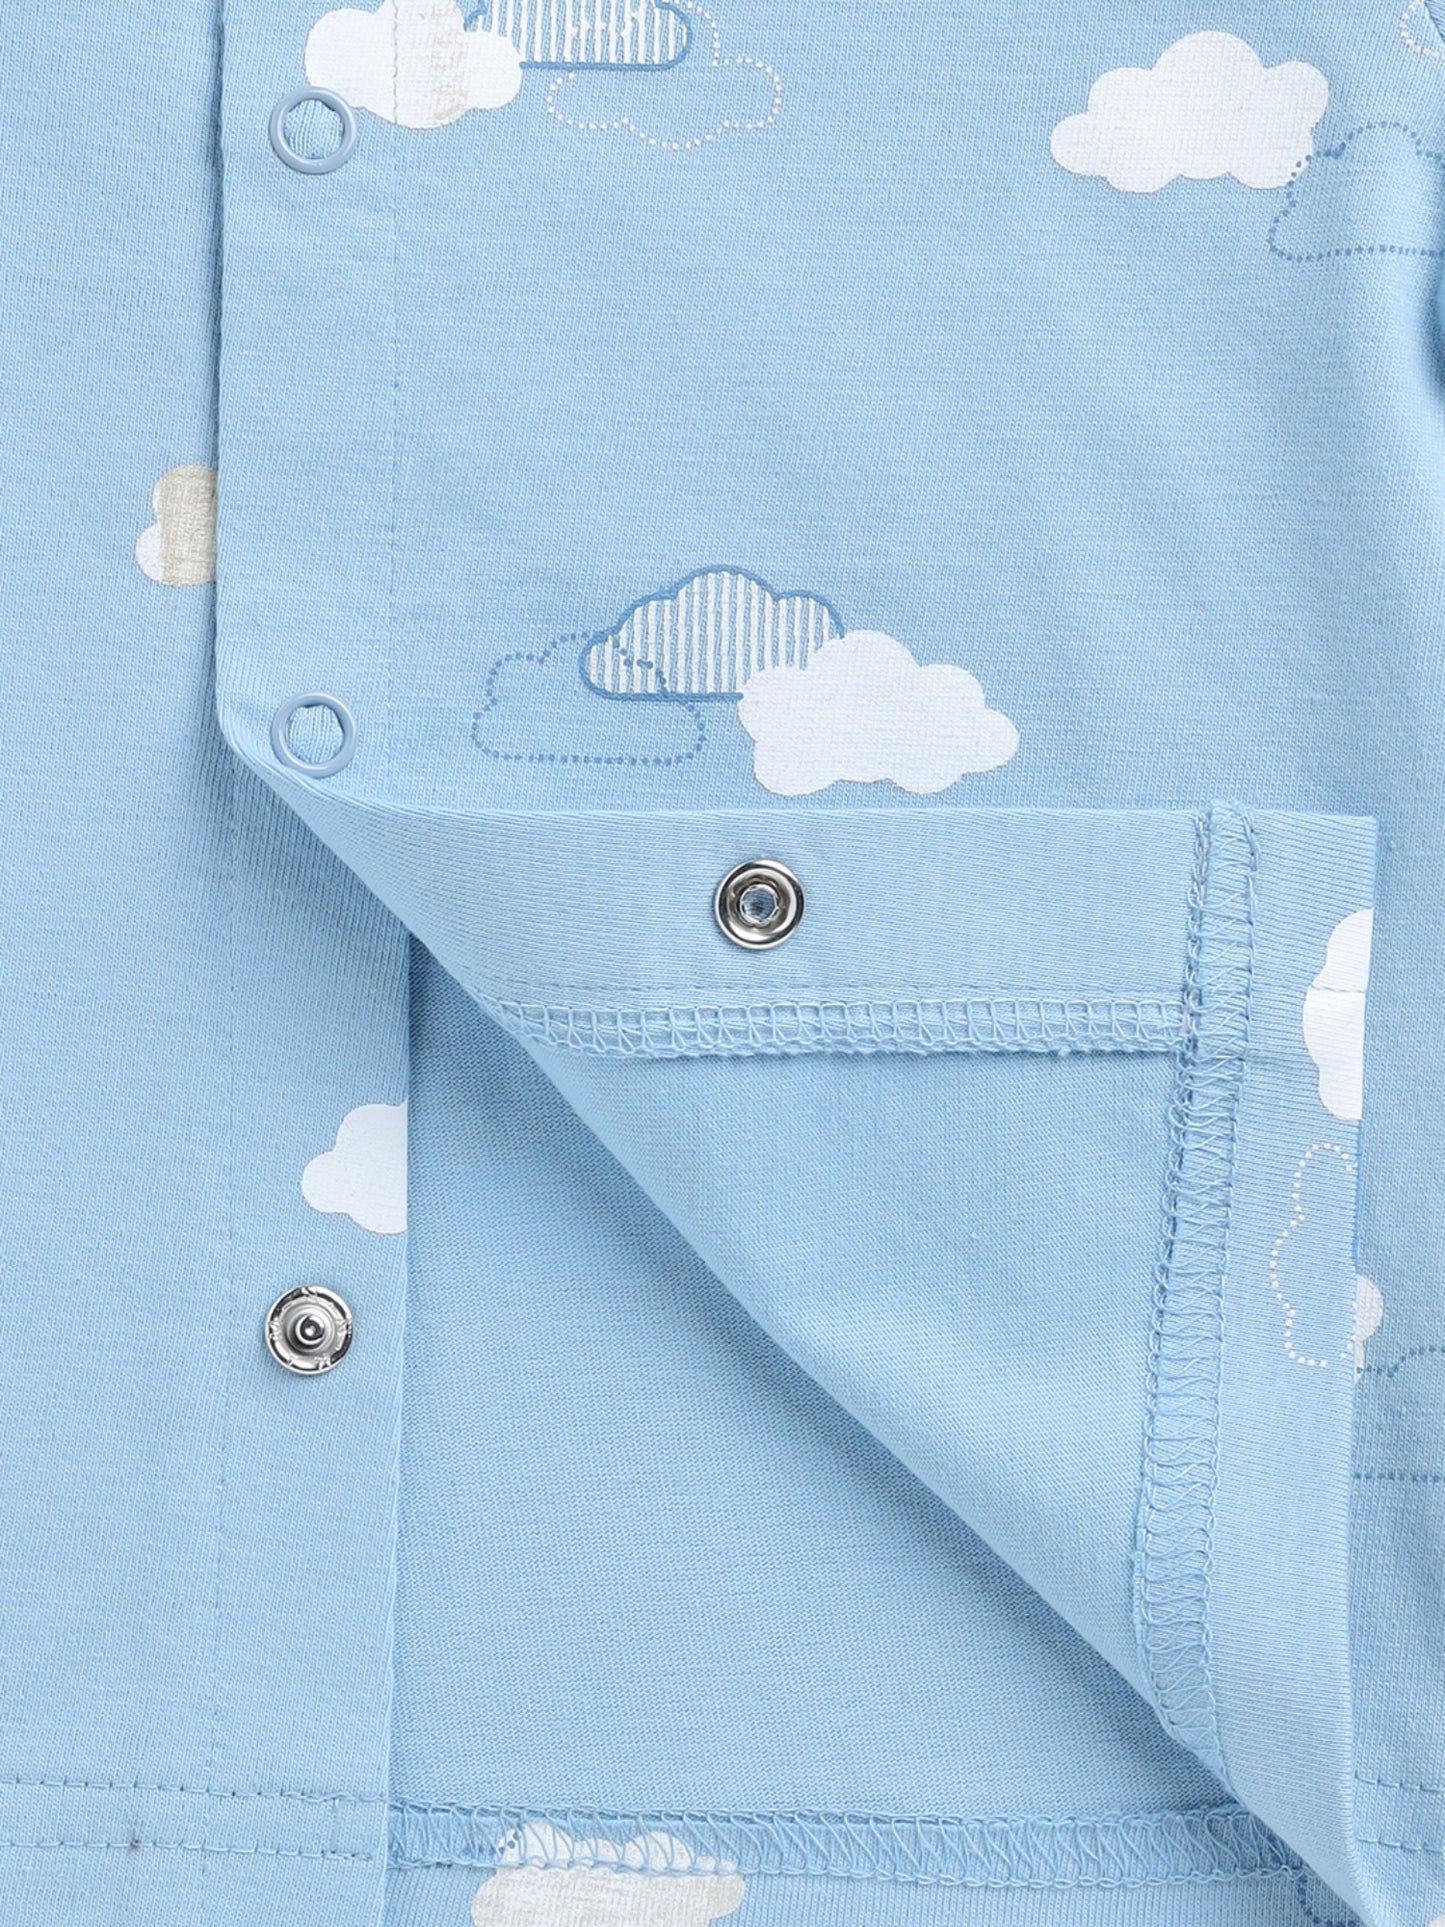 Clouds Light Blue Cotton Full Sleeve Nightwear Set